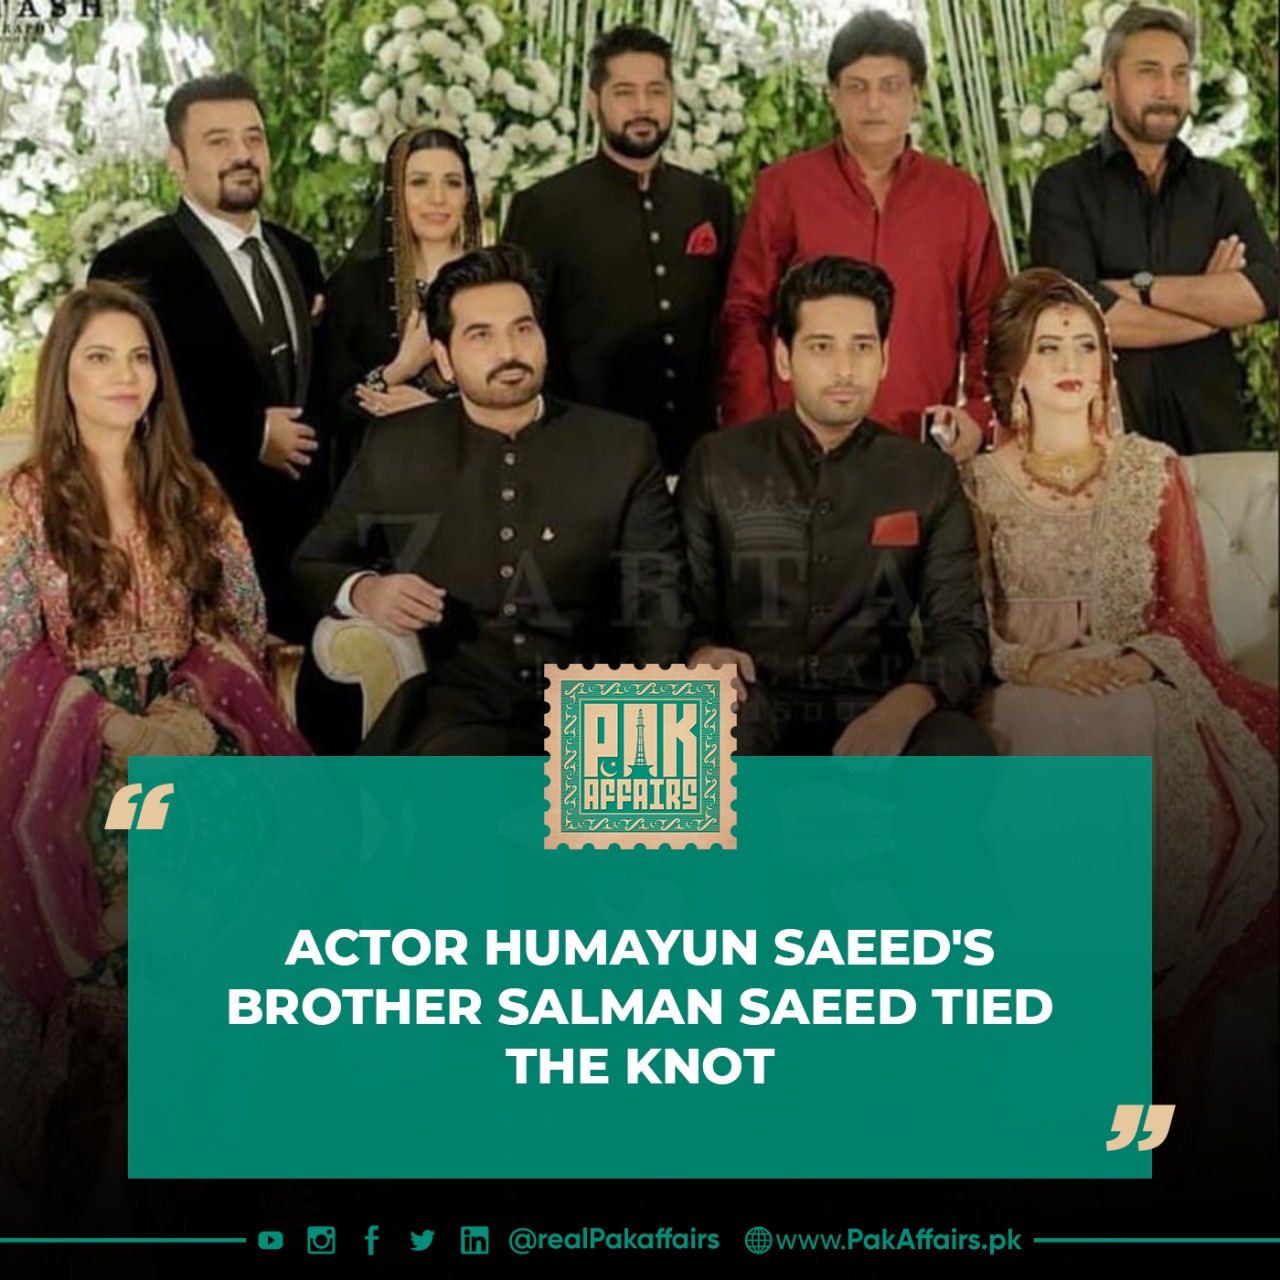 Actor Humayun Saeed's brother Salman Saeed tied the knot.